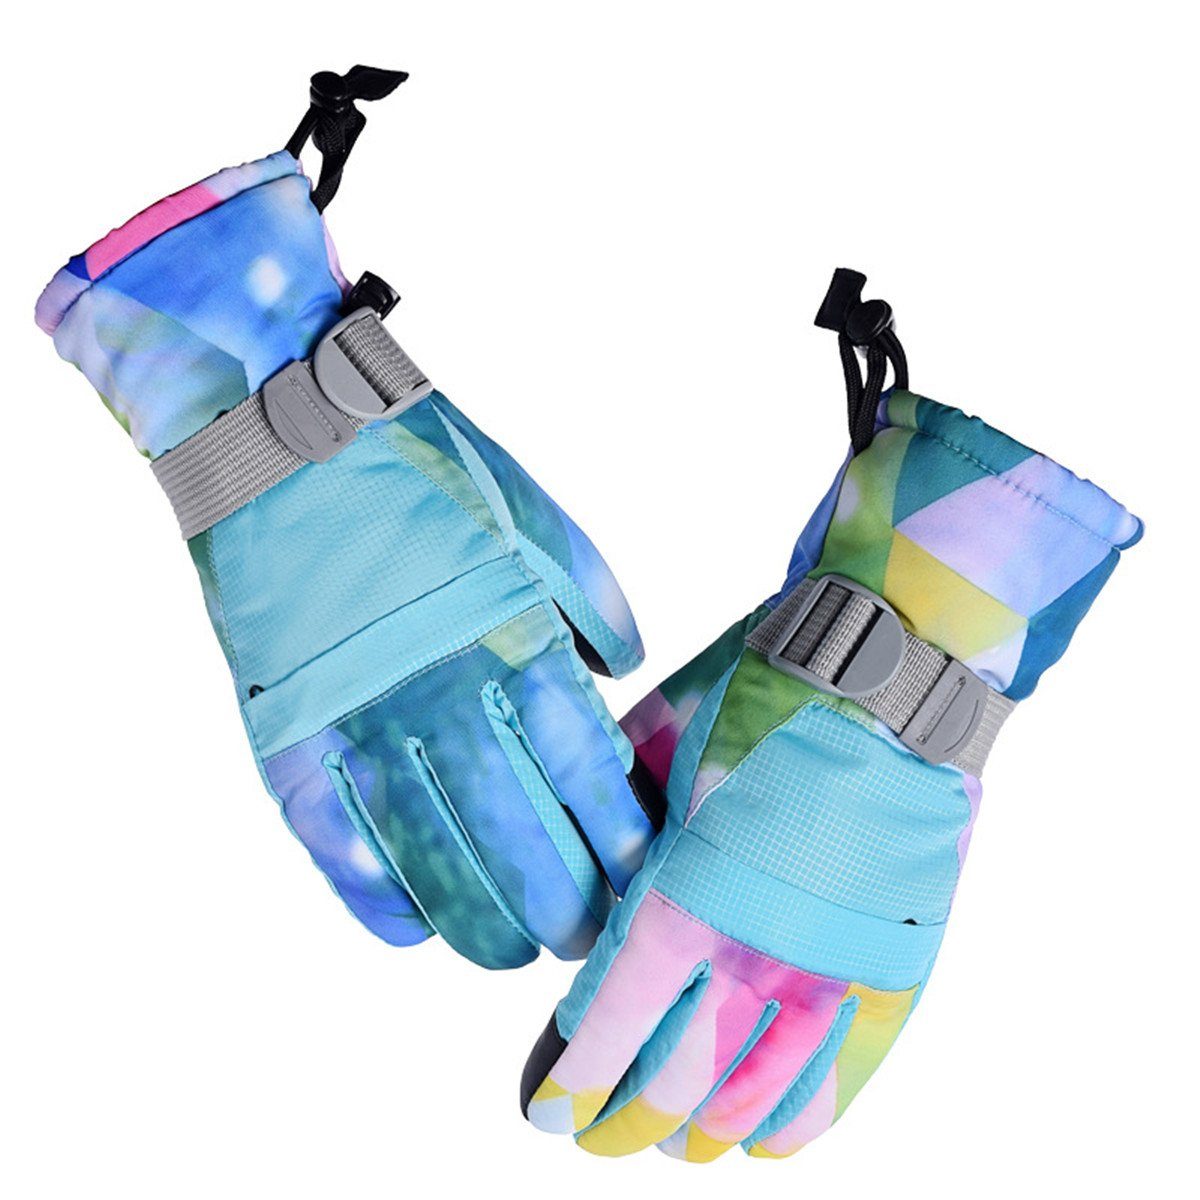 Die Sterne Langlaufhandschuhe Kinder/Männer/Damen Winter-Outdoor-Sport-Snowboard-Handschuhe Narzissenorchidee